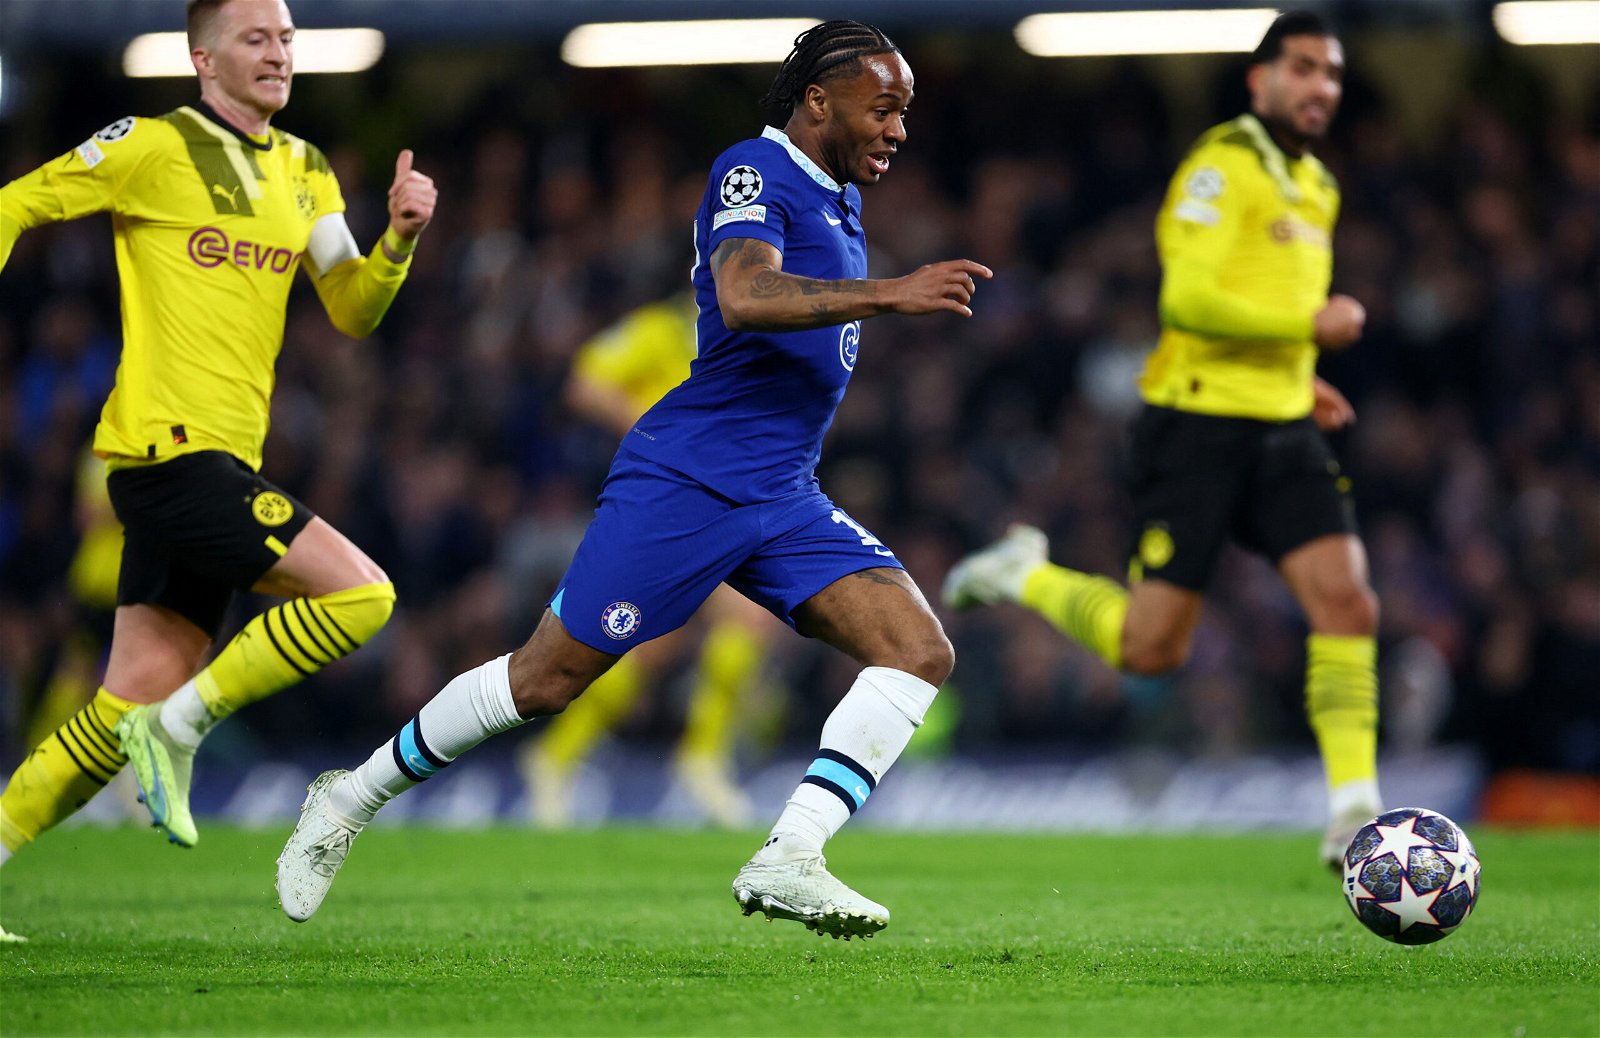 Raheem-Sterling-in-action-for-Chelsea-against-Borussia-Dortmund